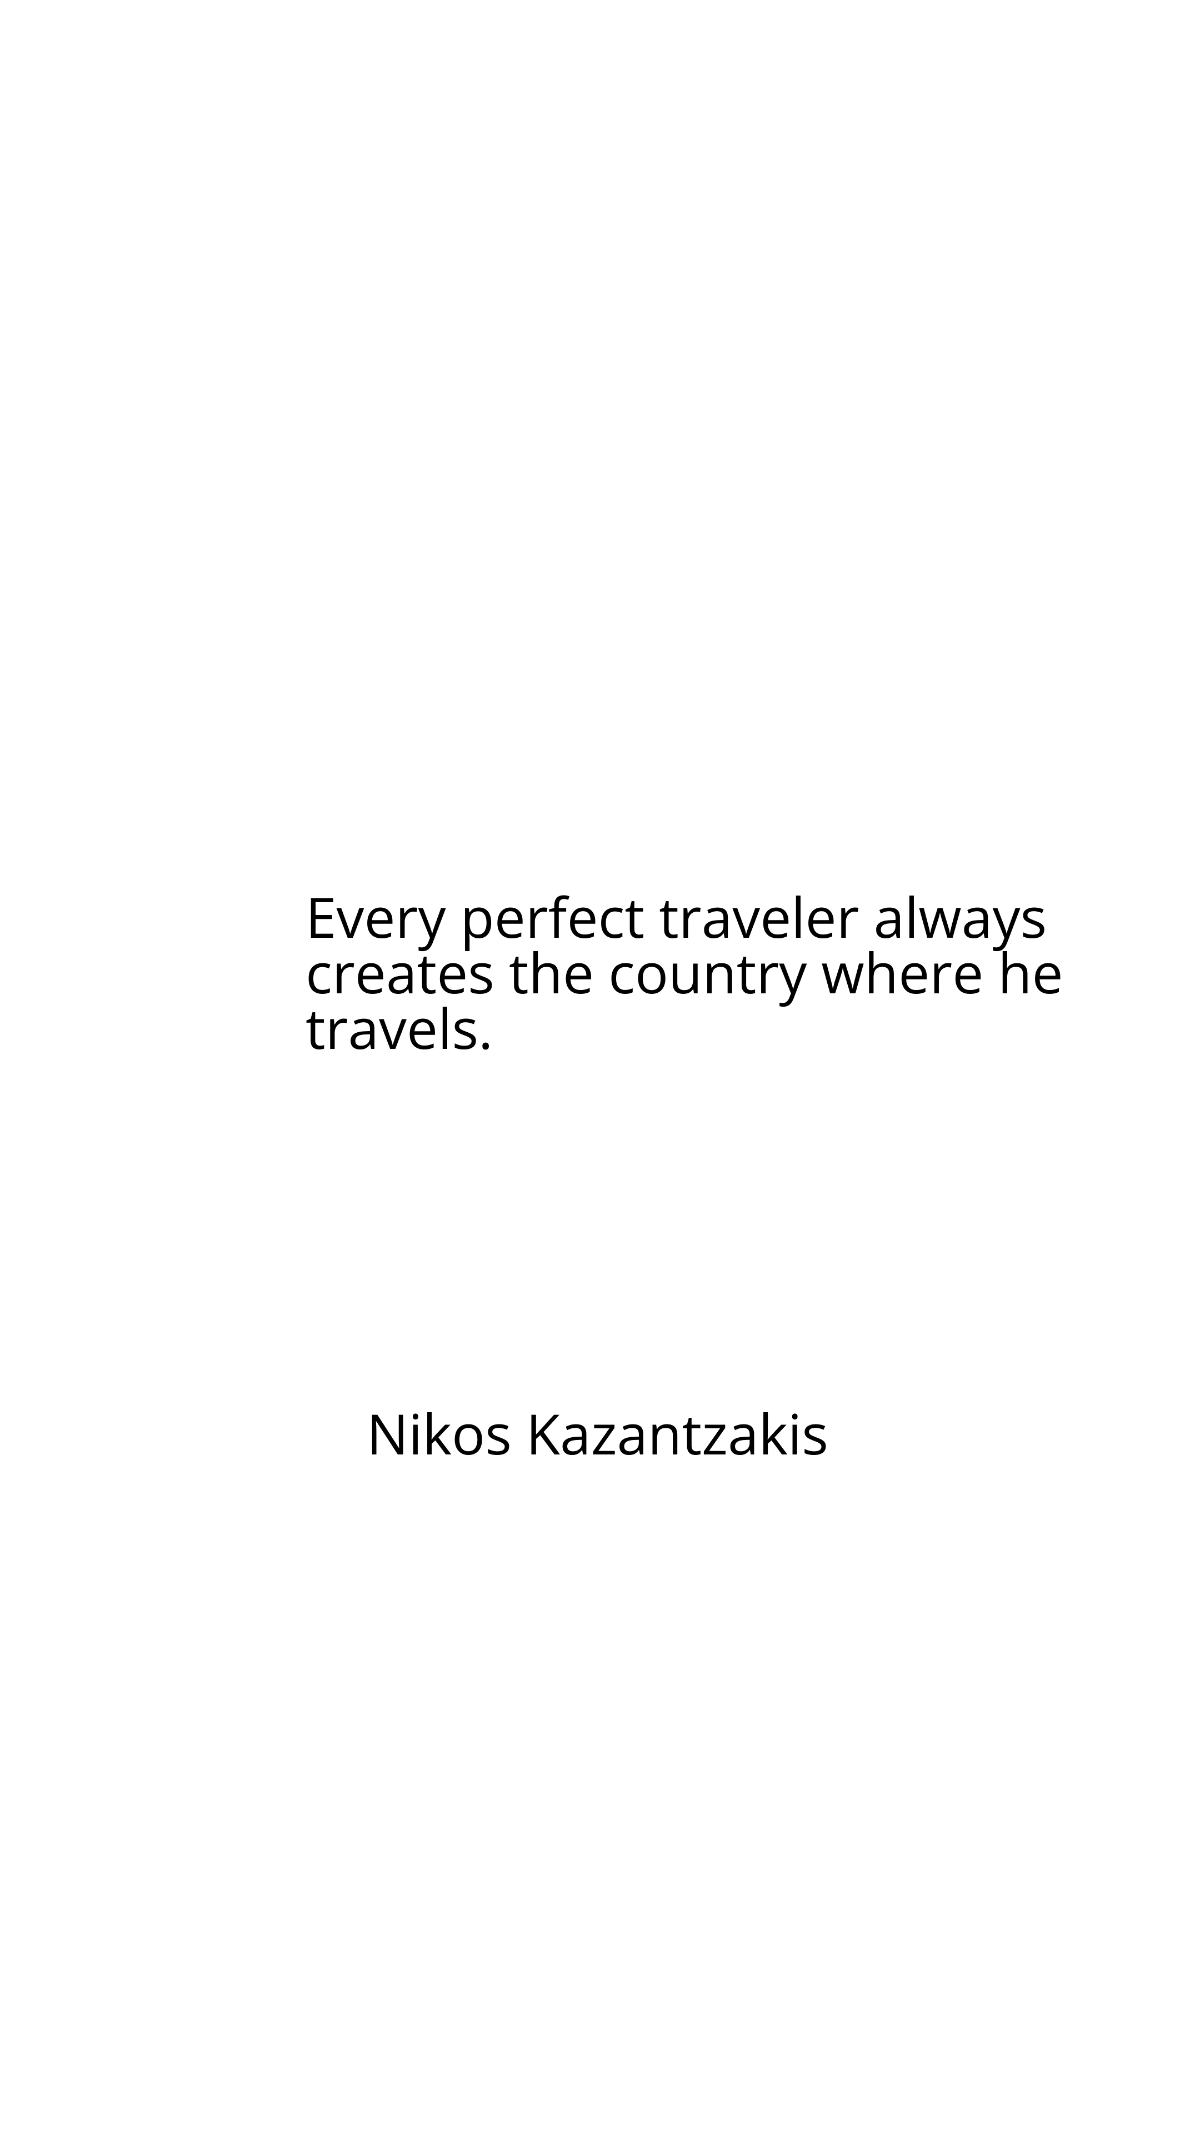 Nikos Kazantzakis - Every perfect traveler always creates the country where he travels. Template